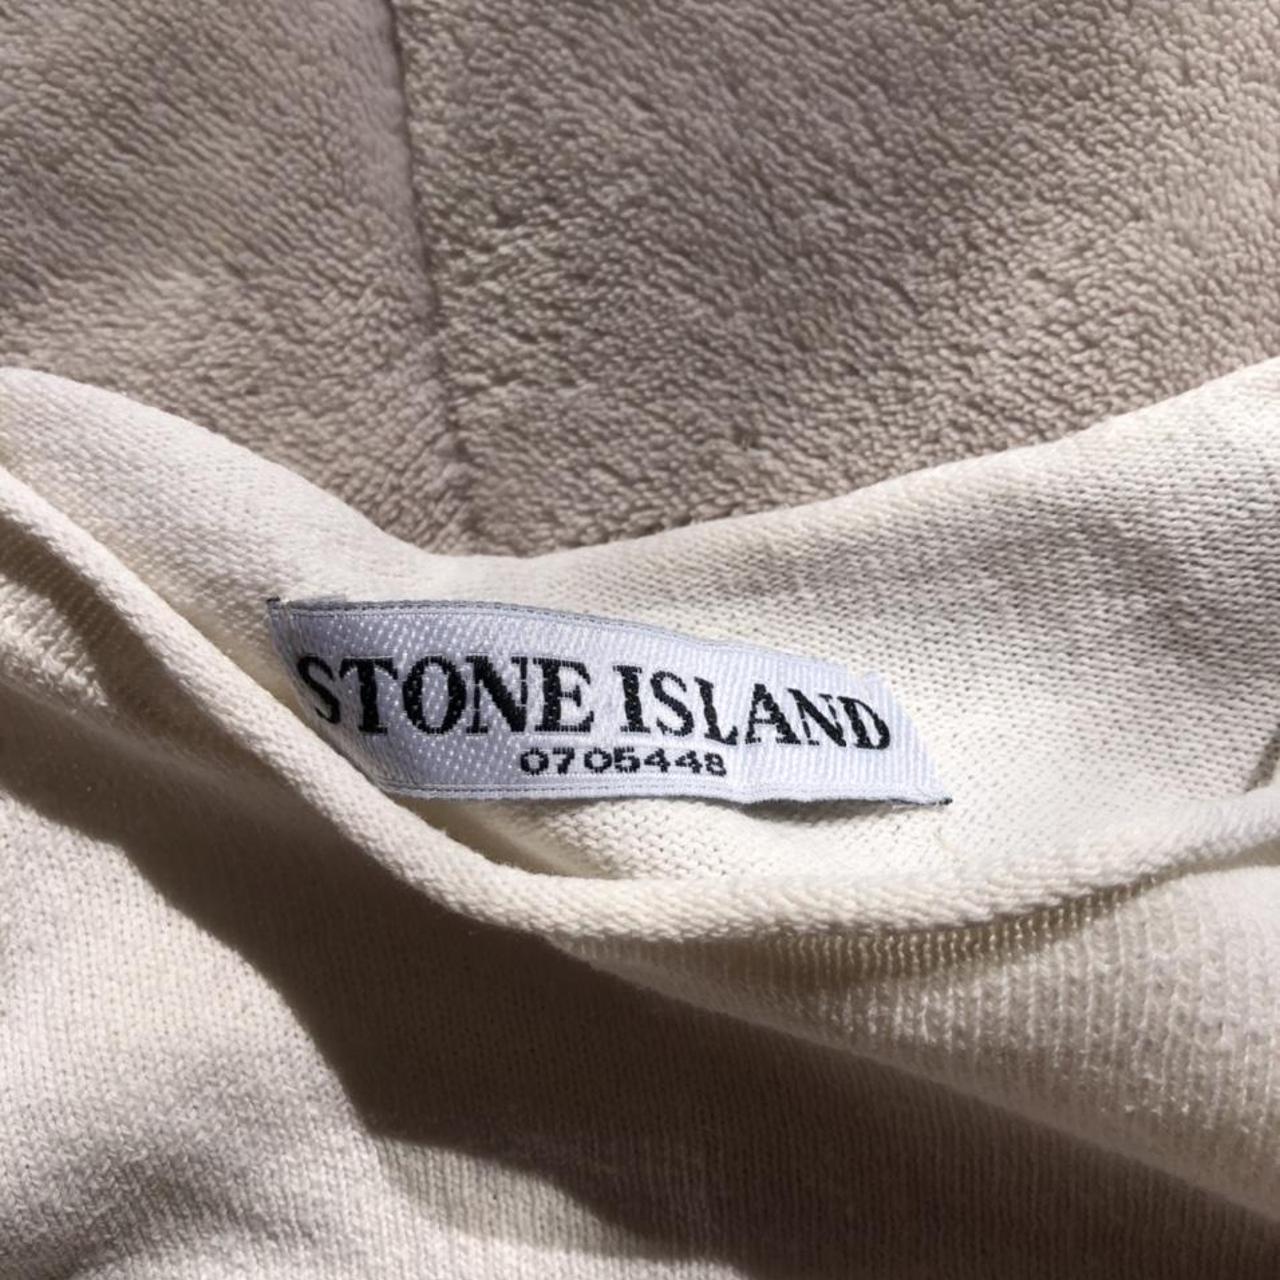 Stone Island vintage Tee Rare item Size S Perfect... - Depop